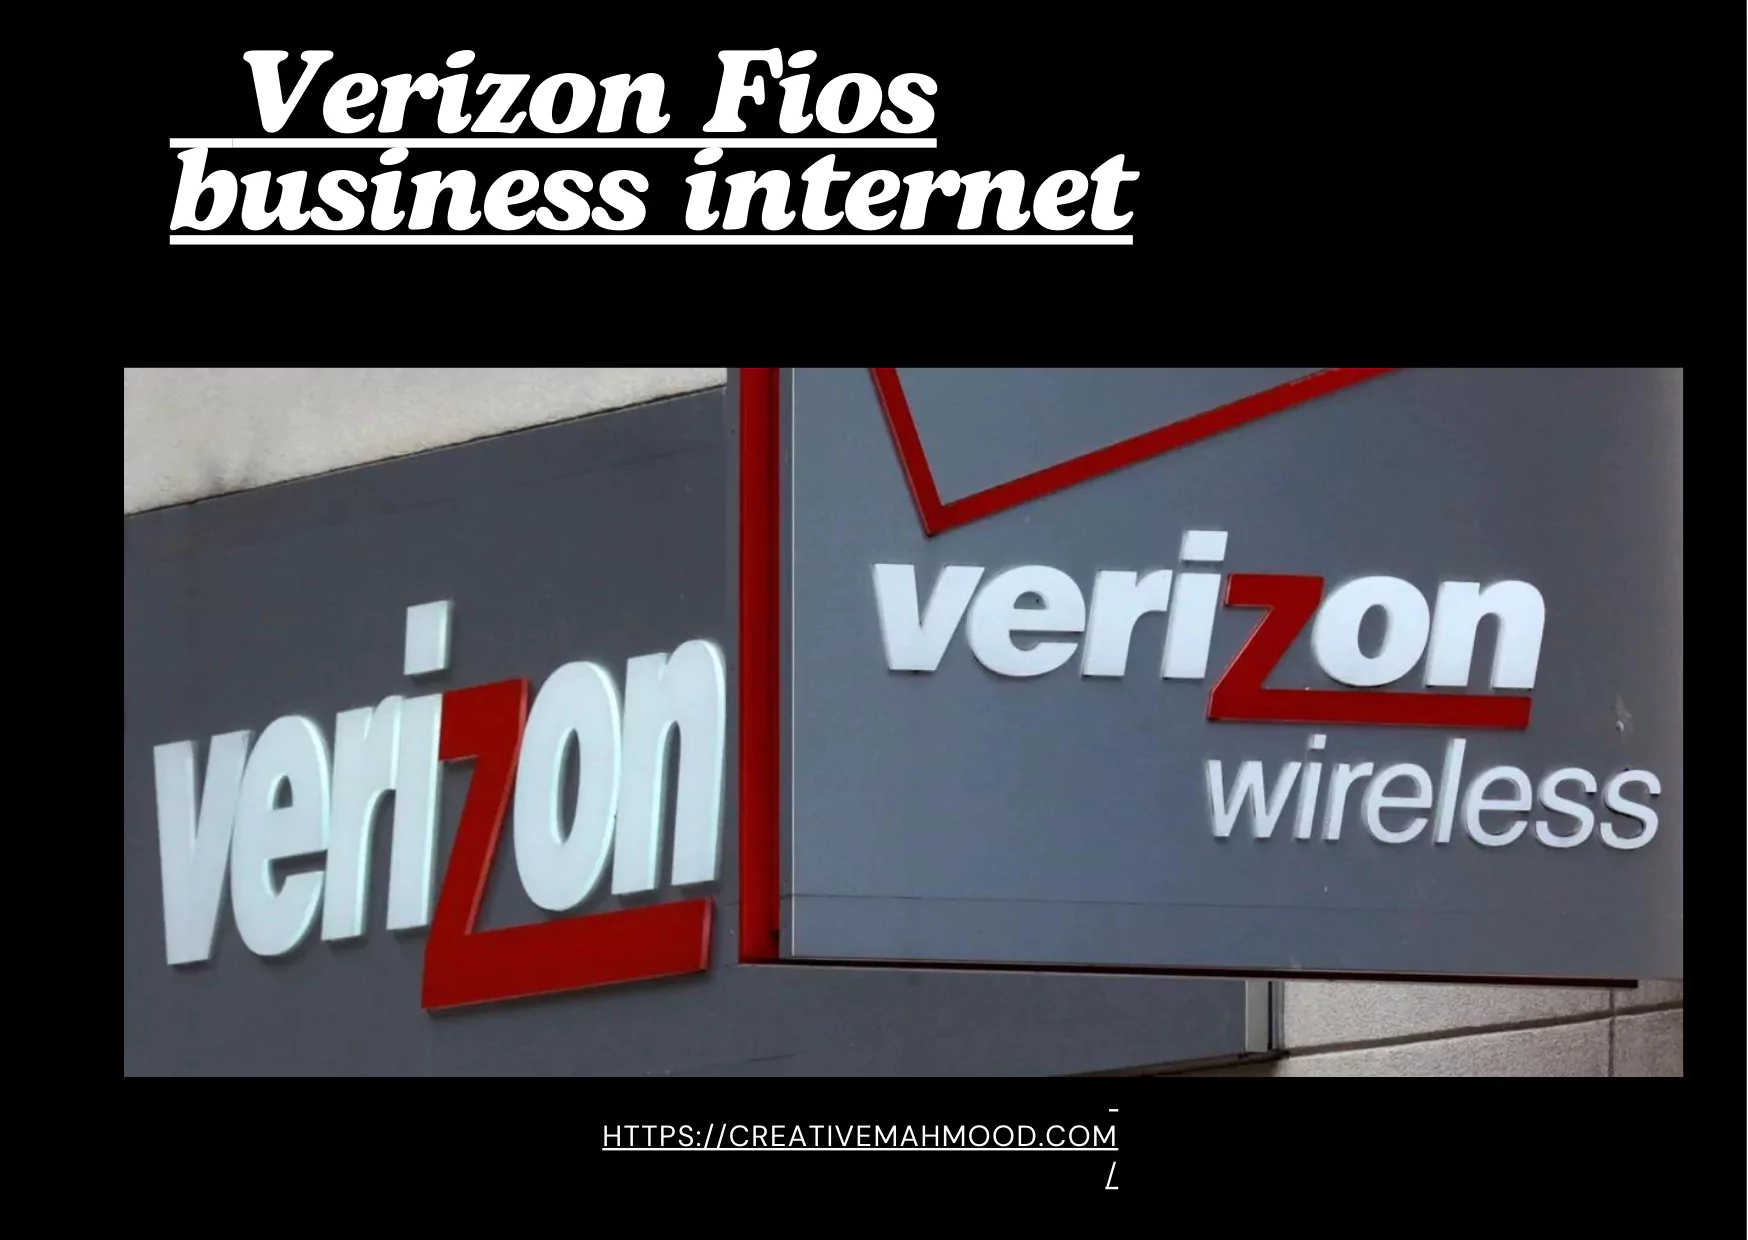 Verizon Fios business internet